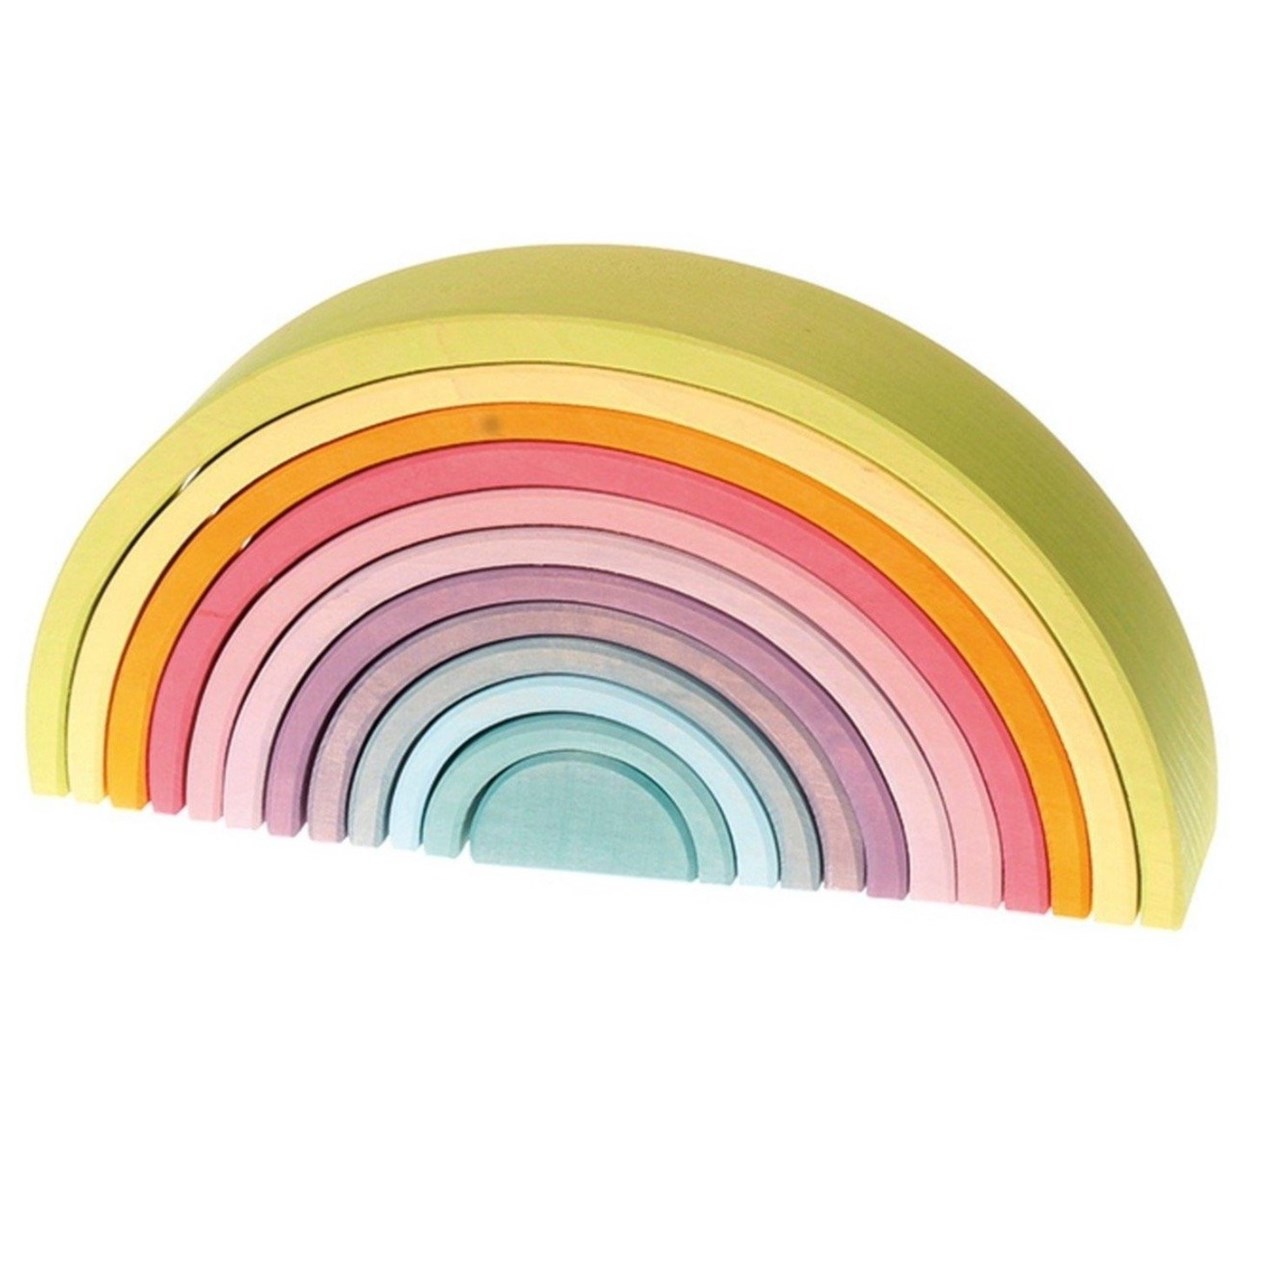 Kinderkram Linz Produkt-Beispiele Regenbogen